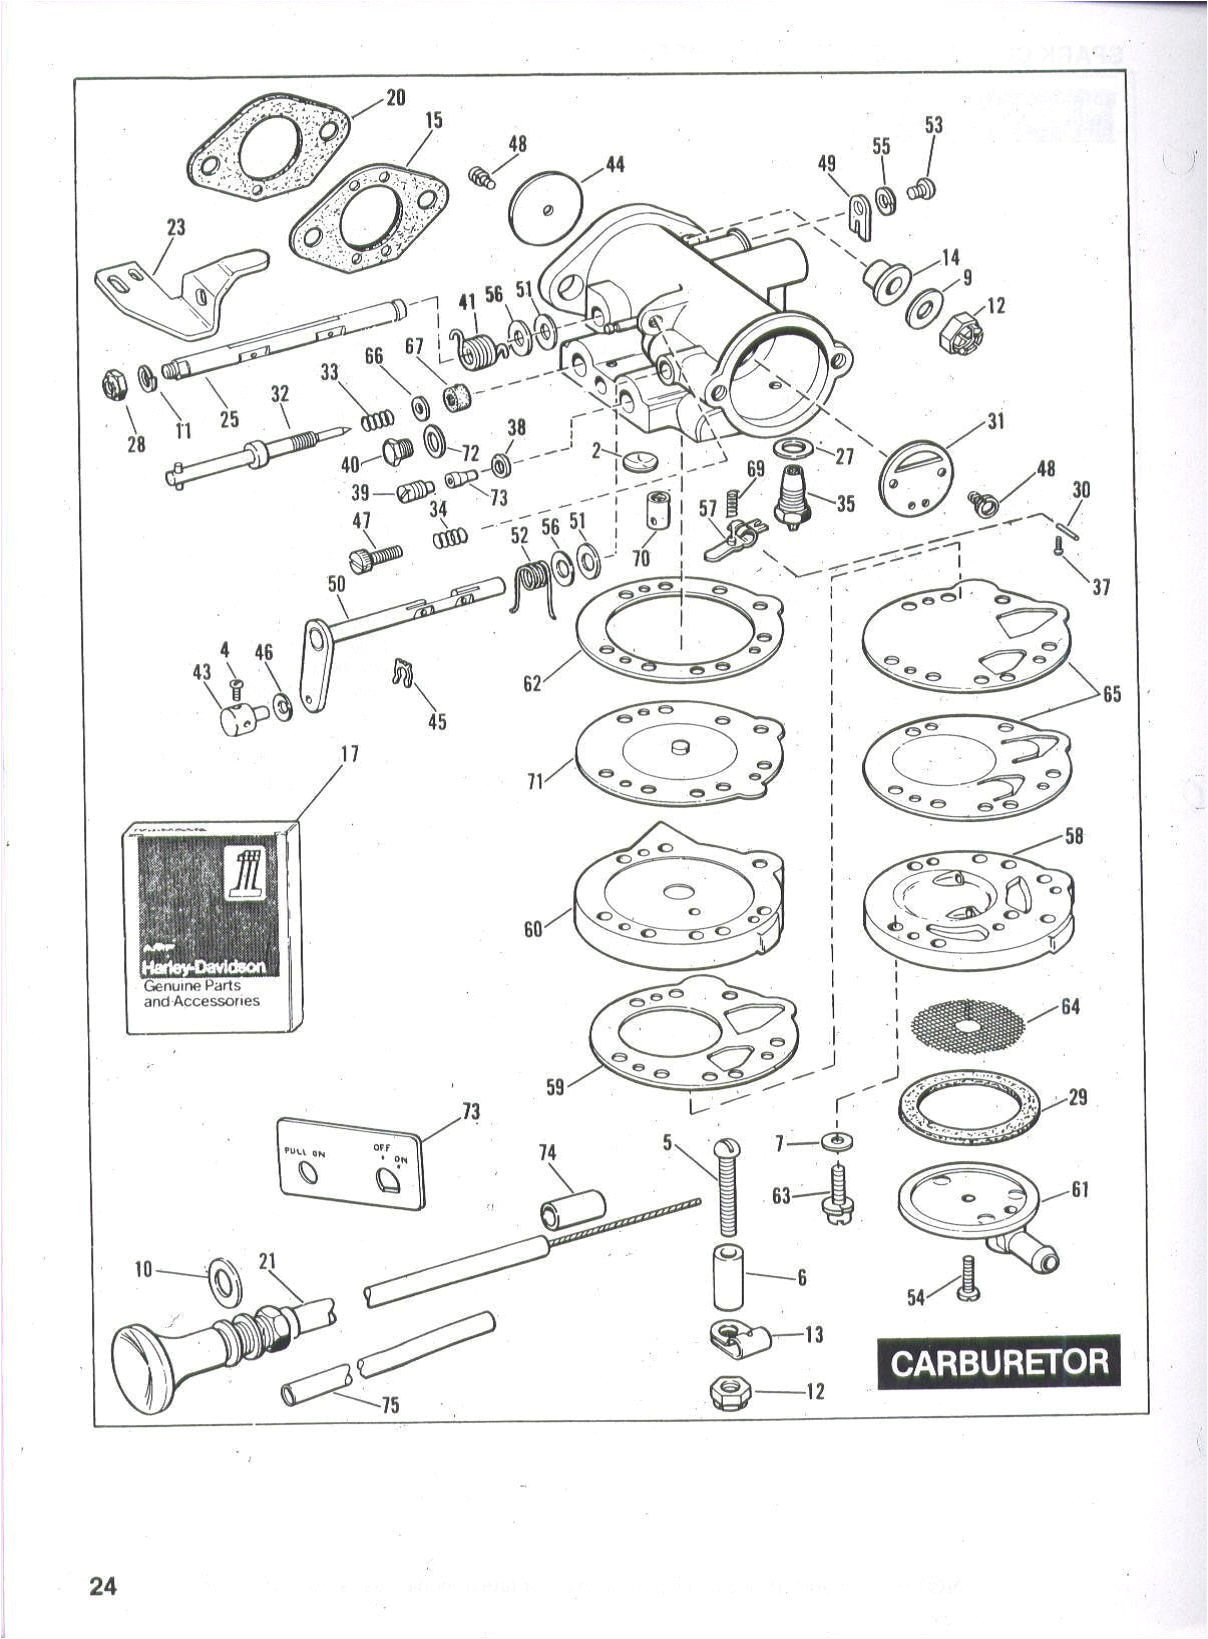 wiring diagram for harley davidson golf cart wiring diagrams terms